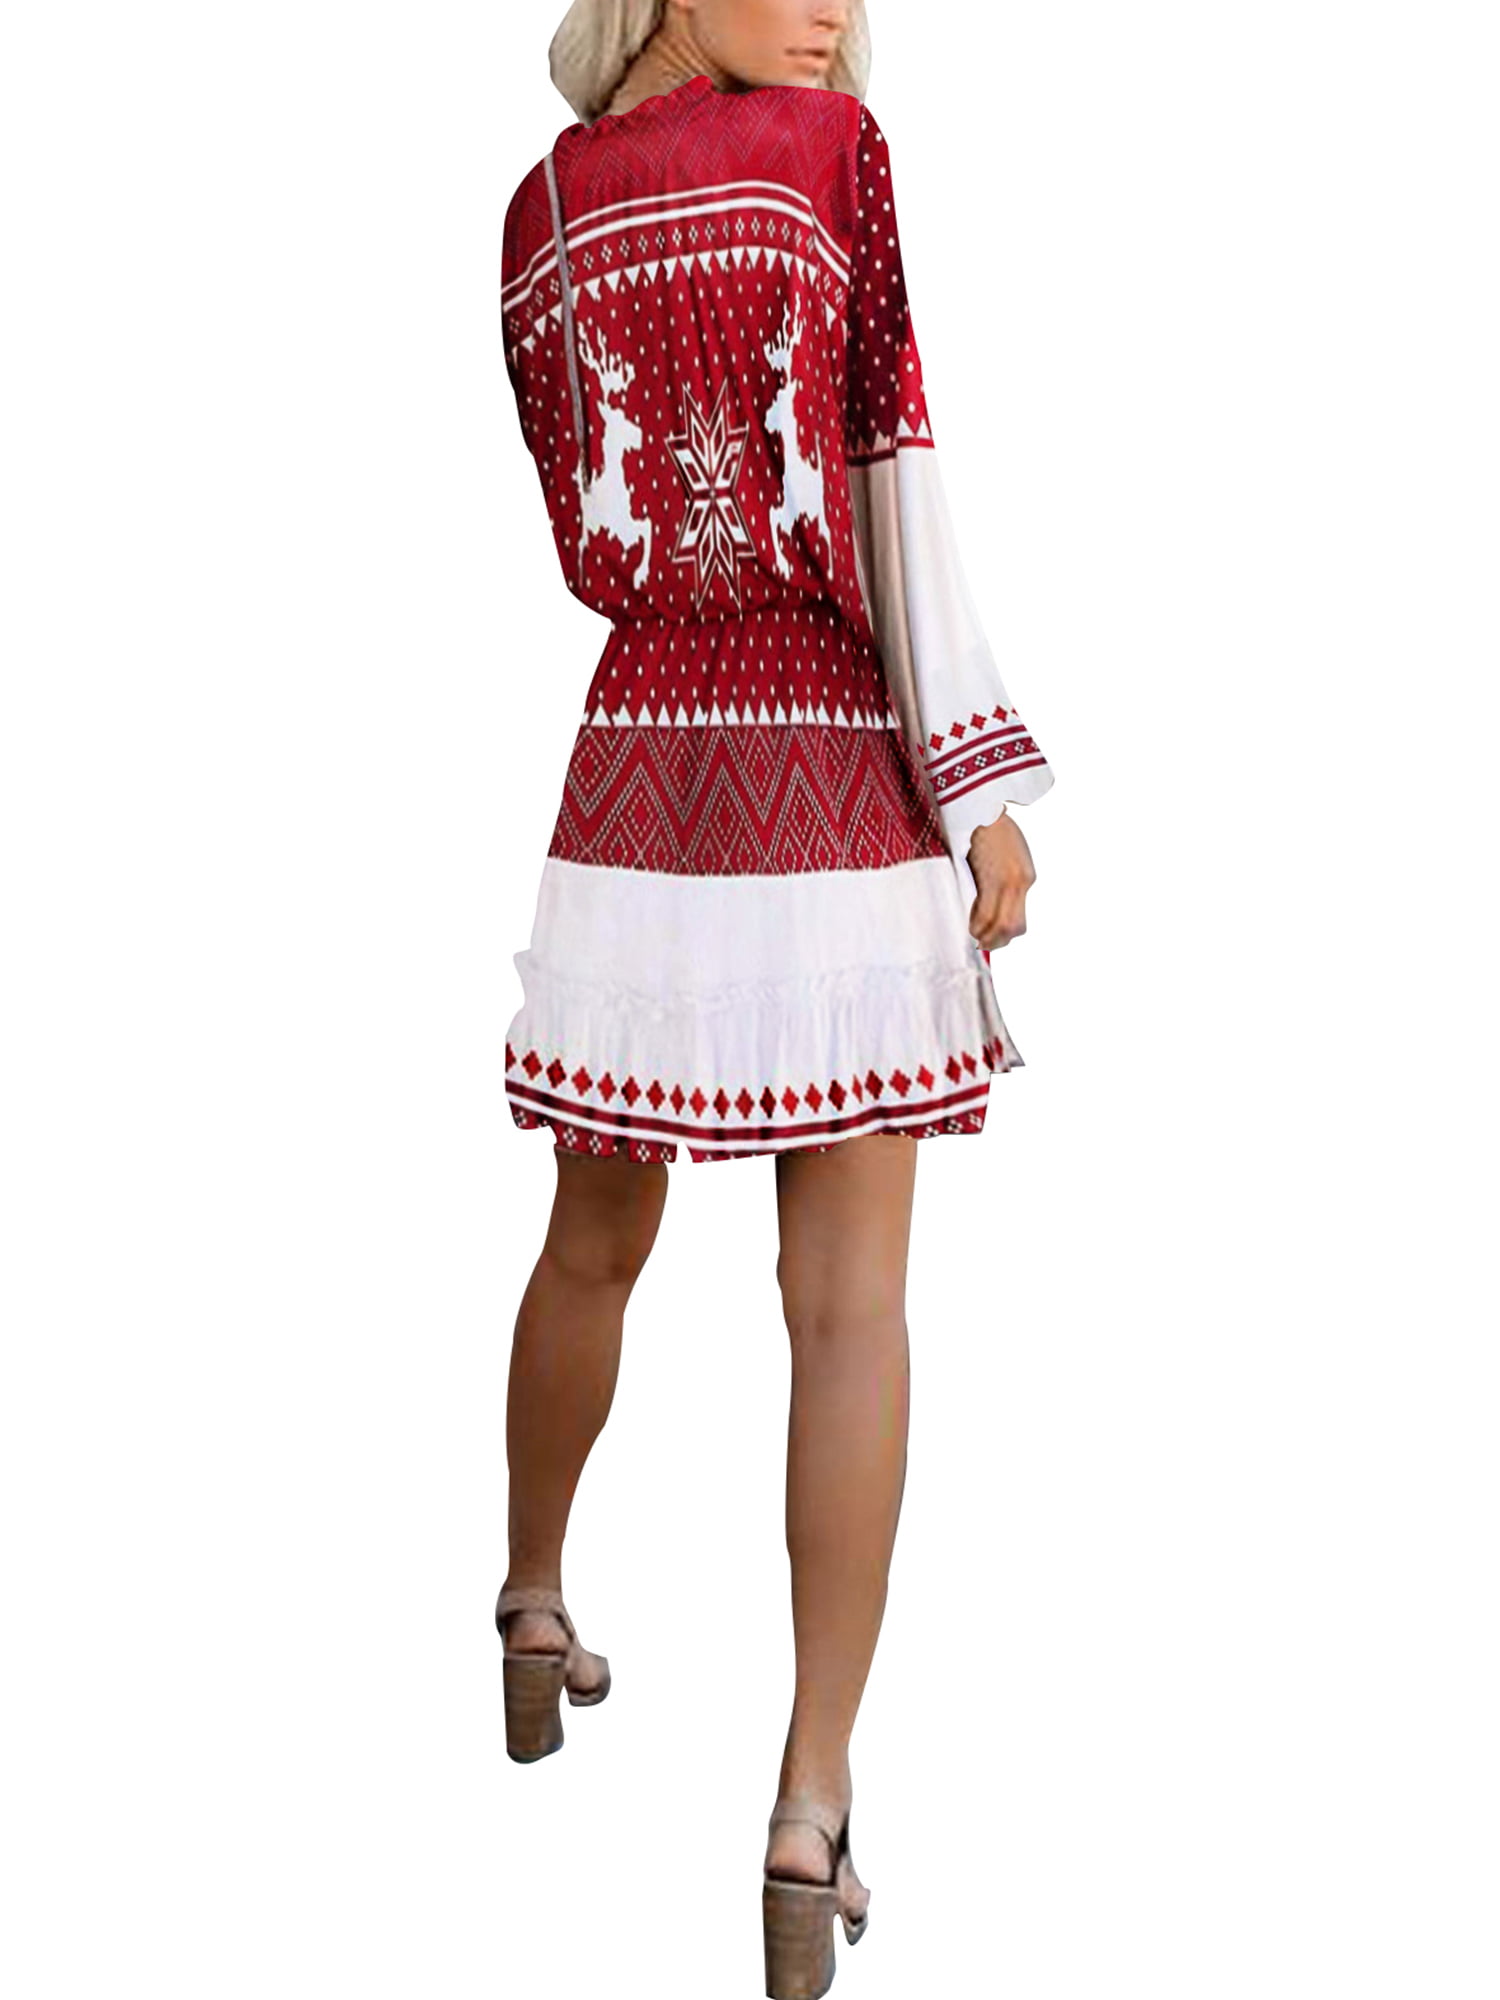 PCEAIIH Women Short/Long Sleeve Pleated Polka Dot Pocket Swing Casual Midi Dress